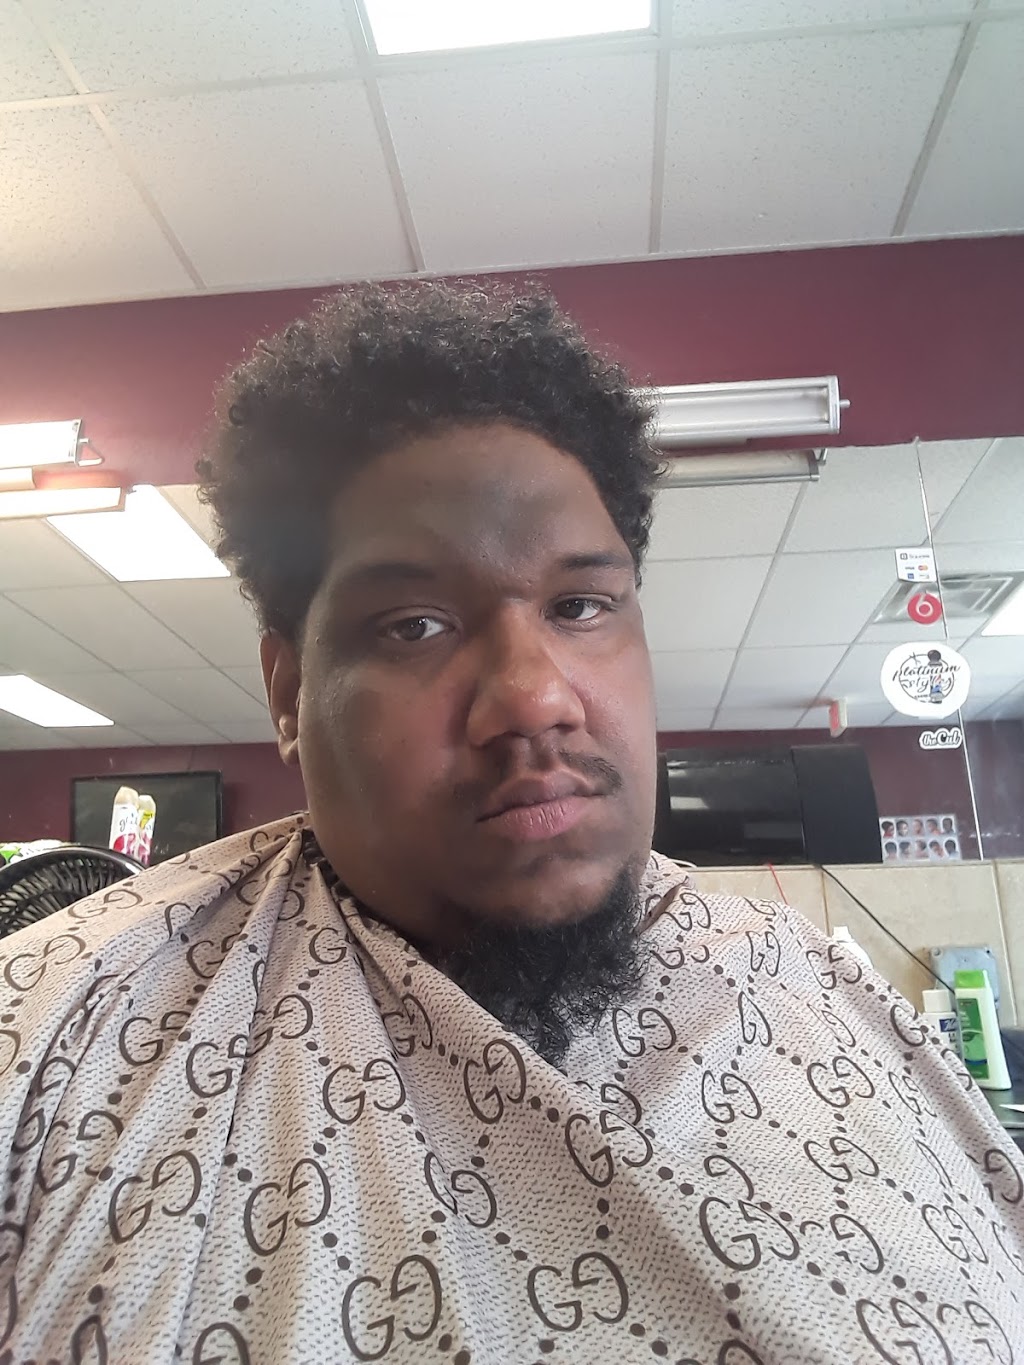 platinum stylez barbershop | 321 E 200th St, Euclid, OH 44119 | Phone: (216) 713-0033